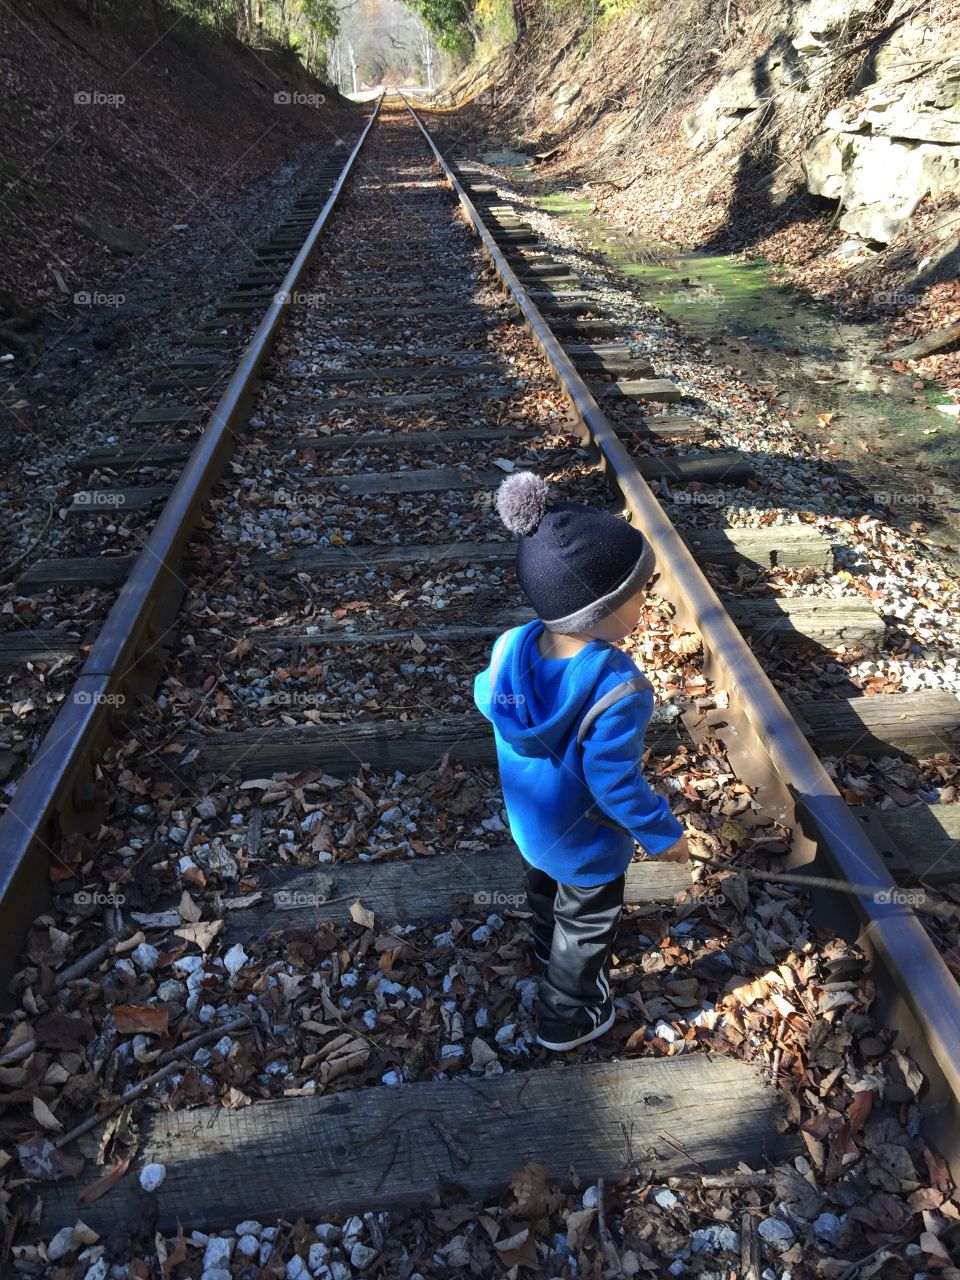 Boys, trains, sticks, and rocks